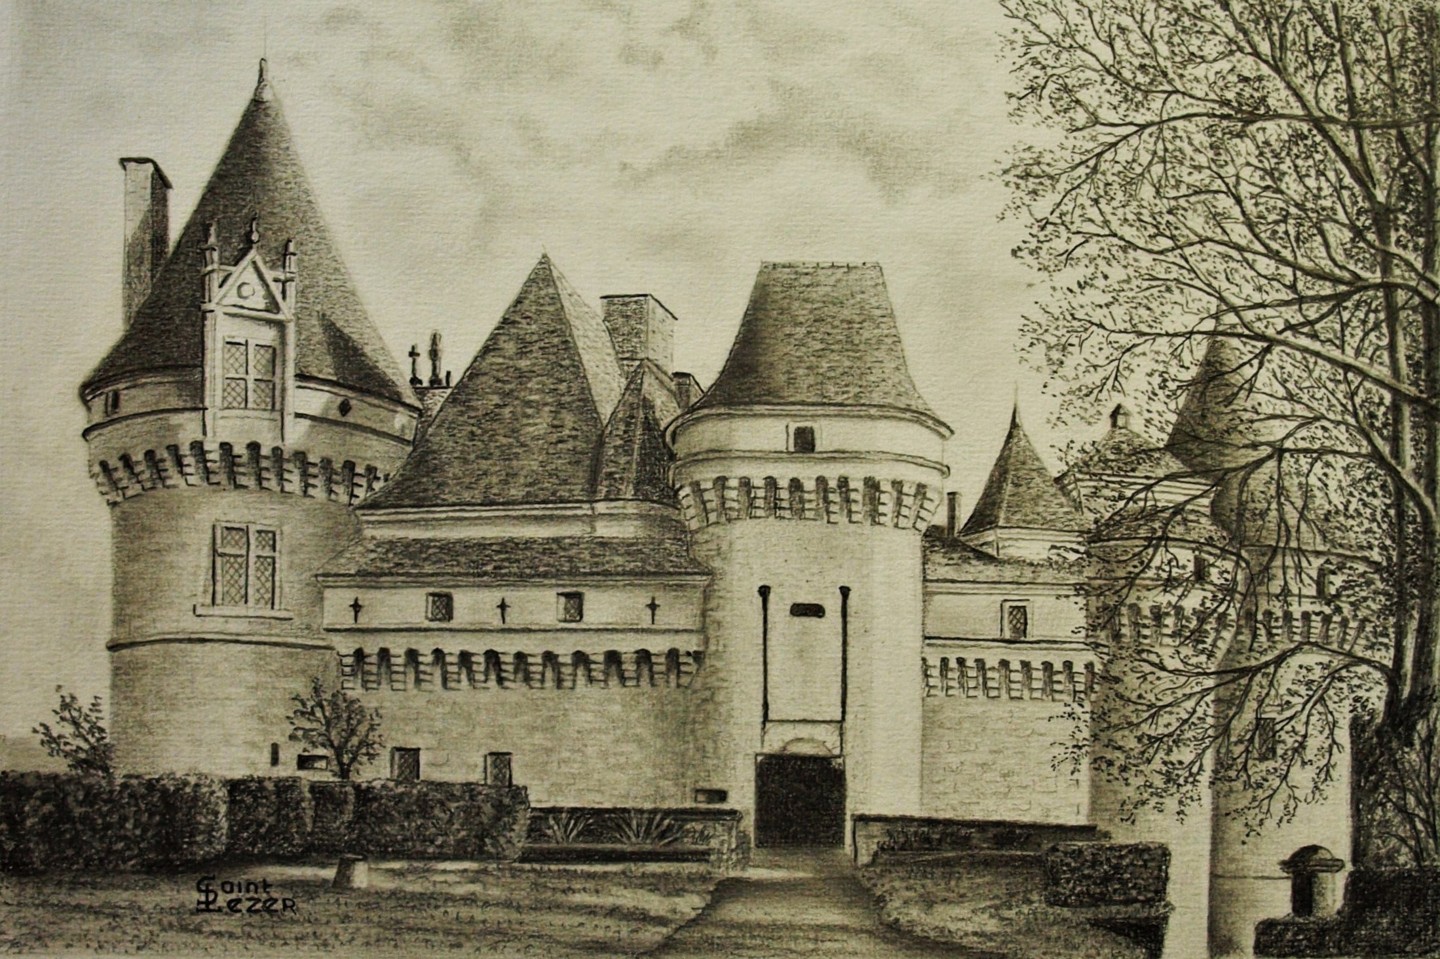 Chateau De Chabenet Wallpapers